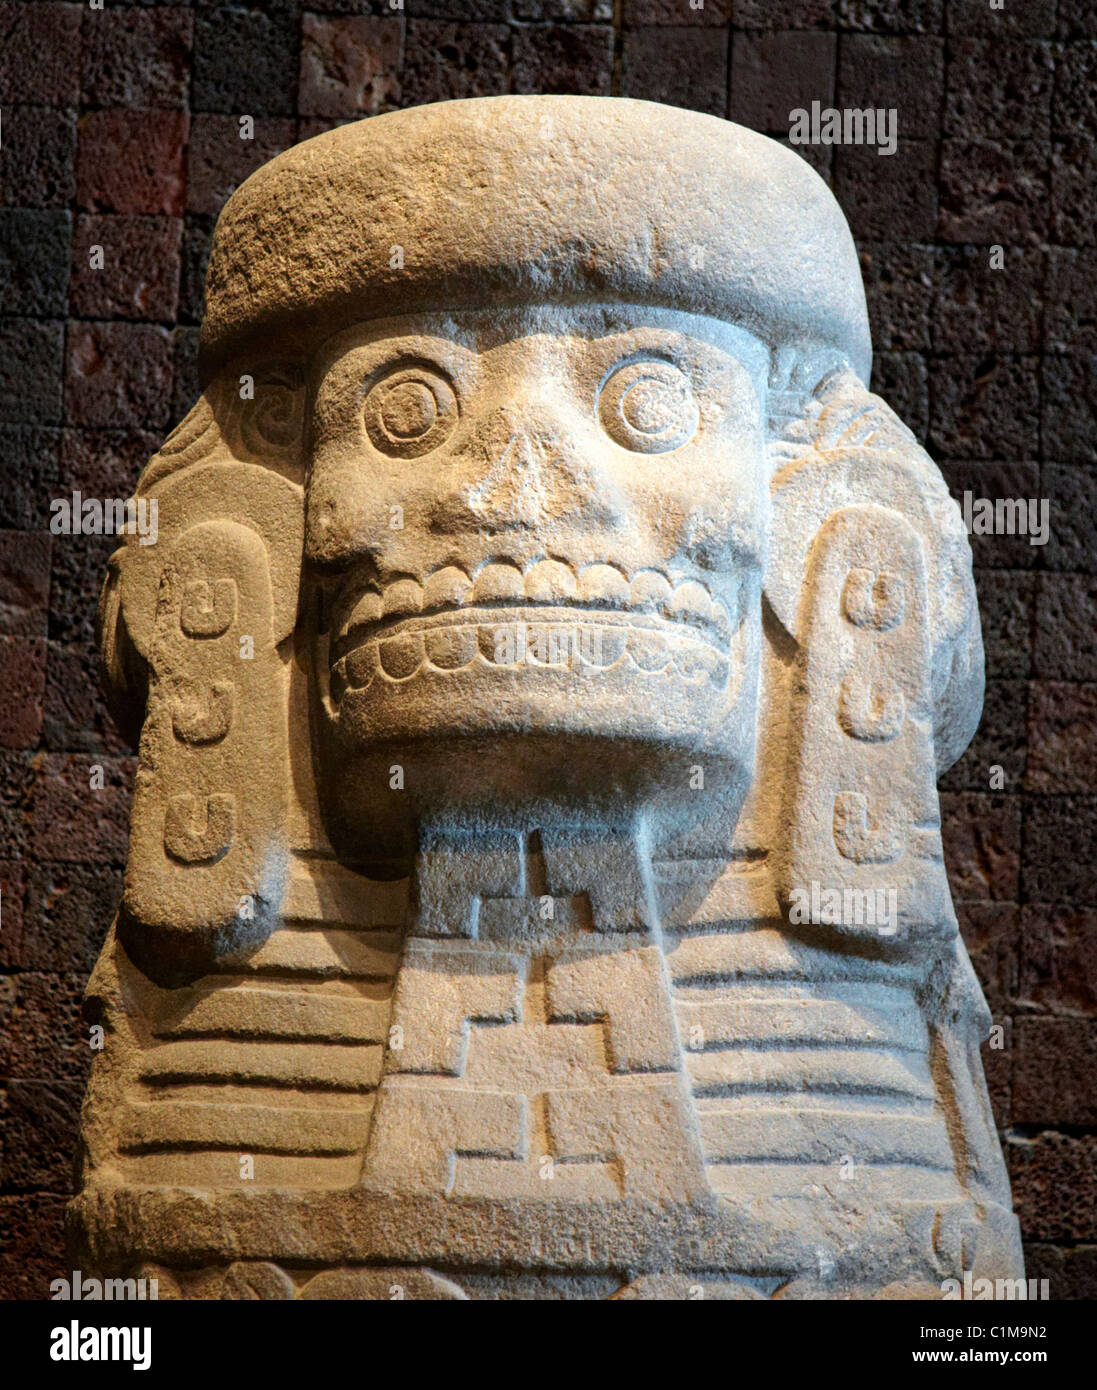 Ancient Aztec Artifacts